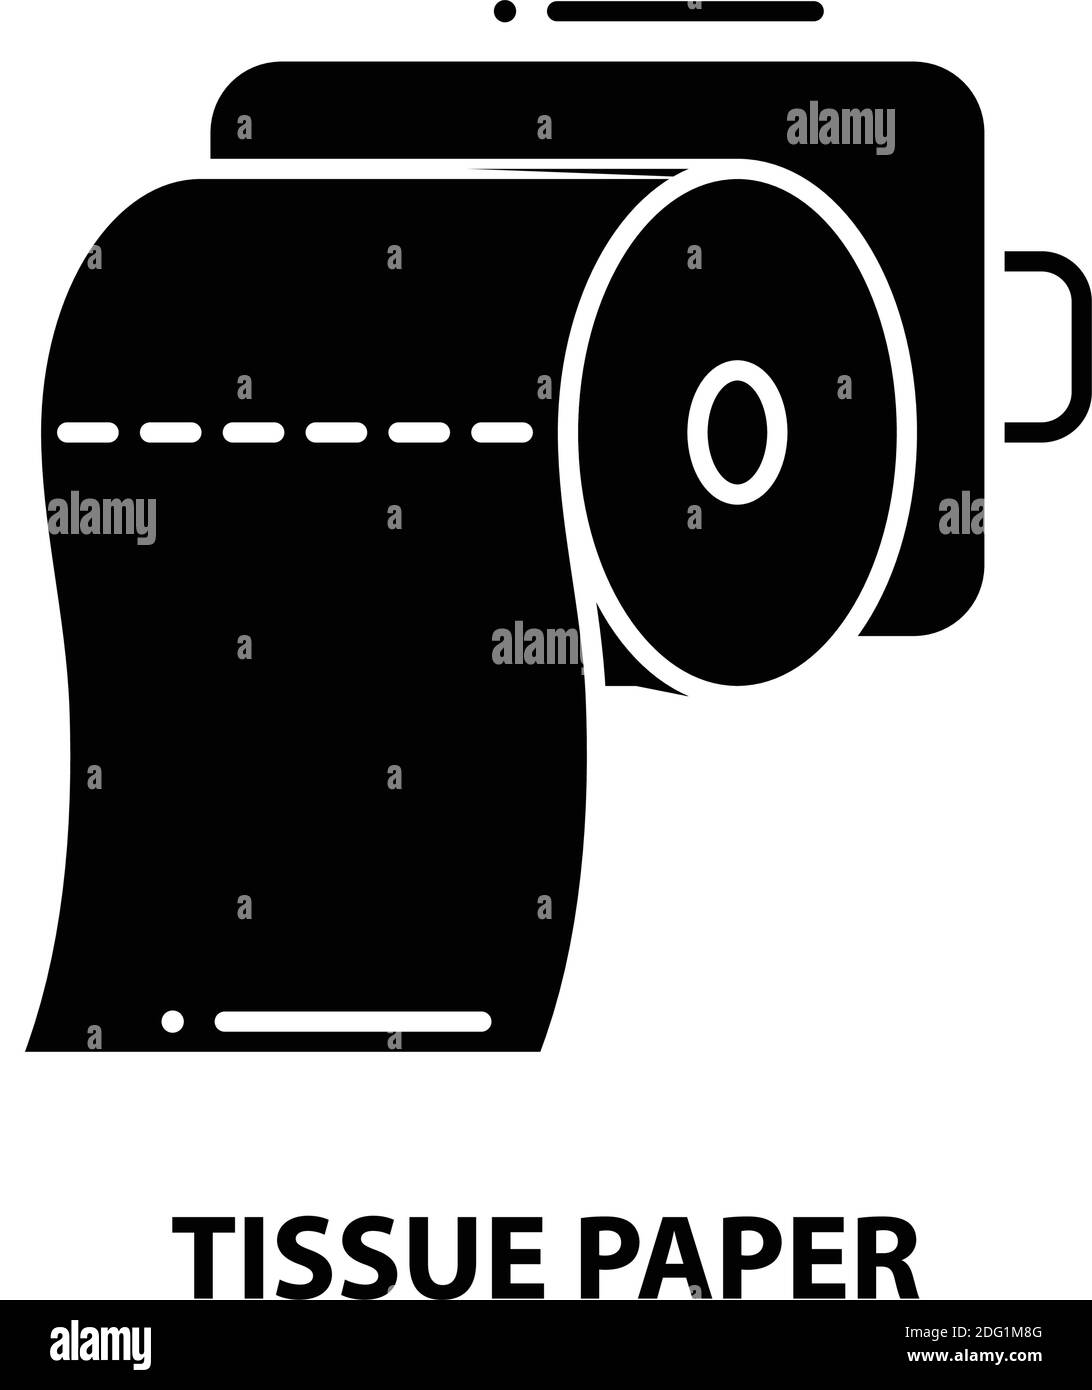 tissue paper symbol icon, black vector sign with editable strokes, concept illustration Stock Vector